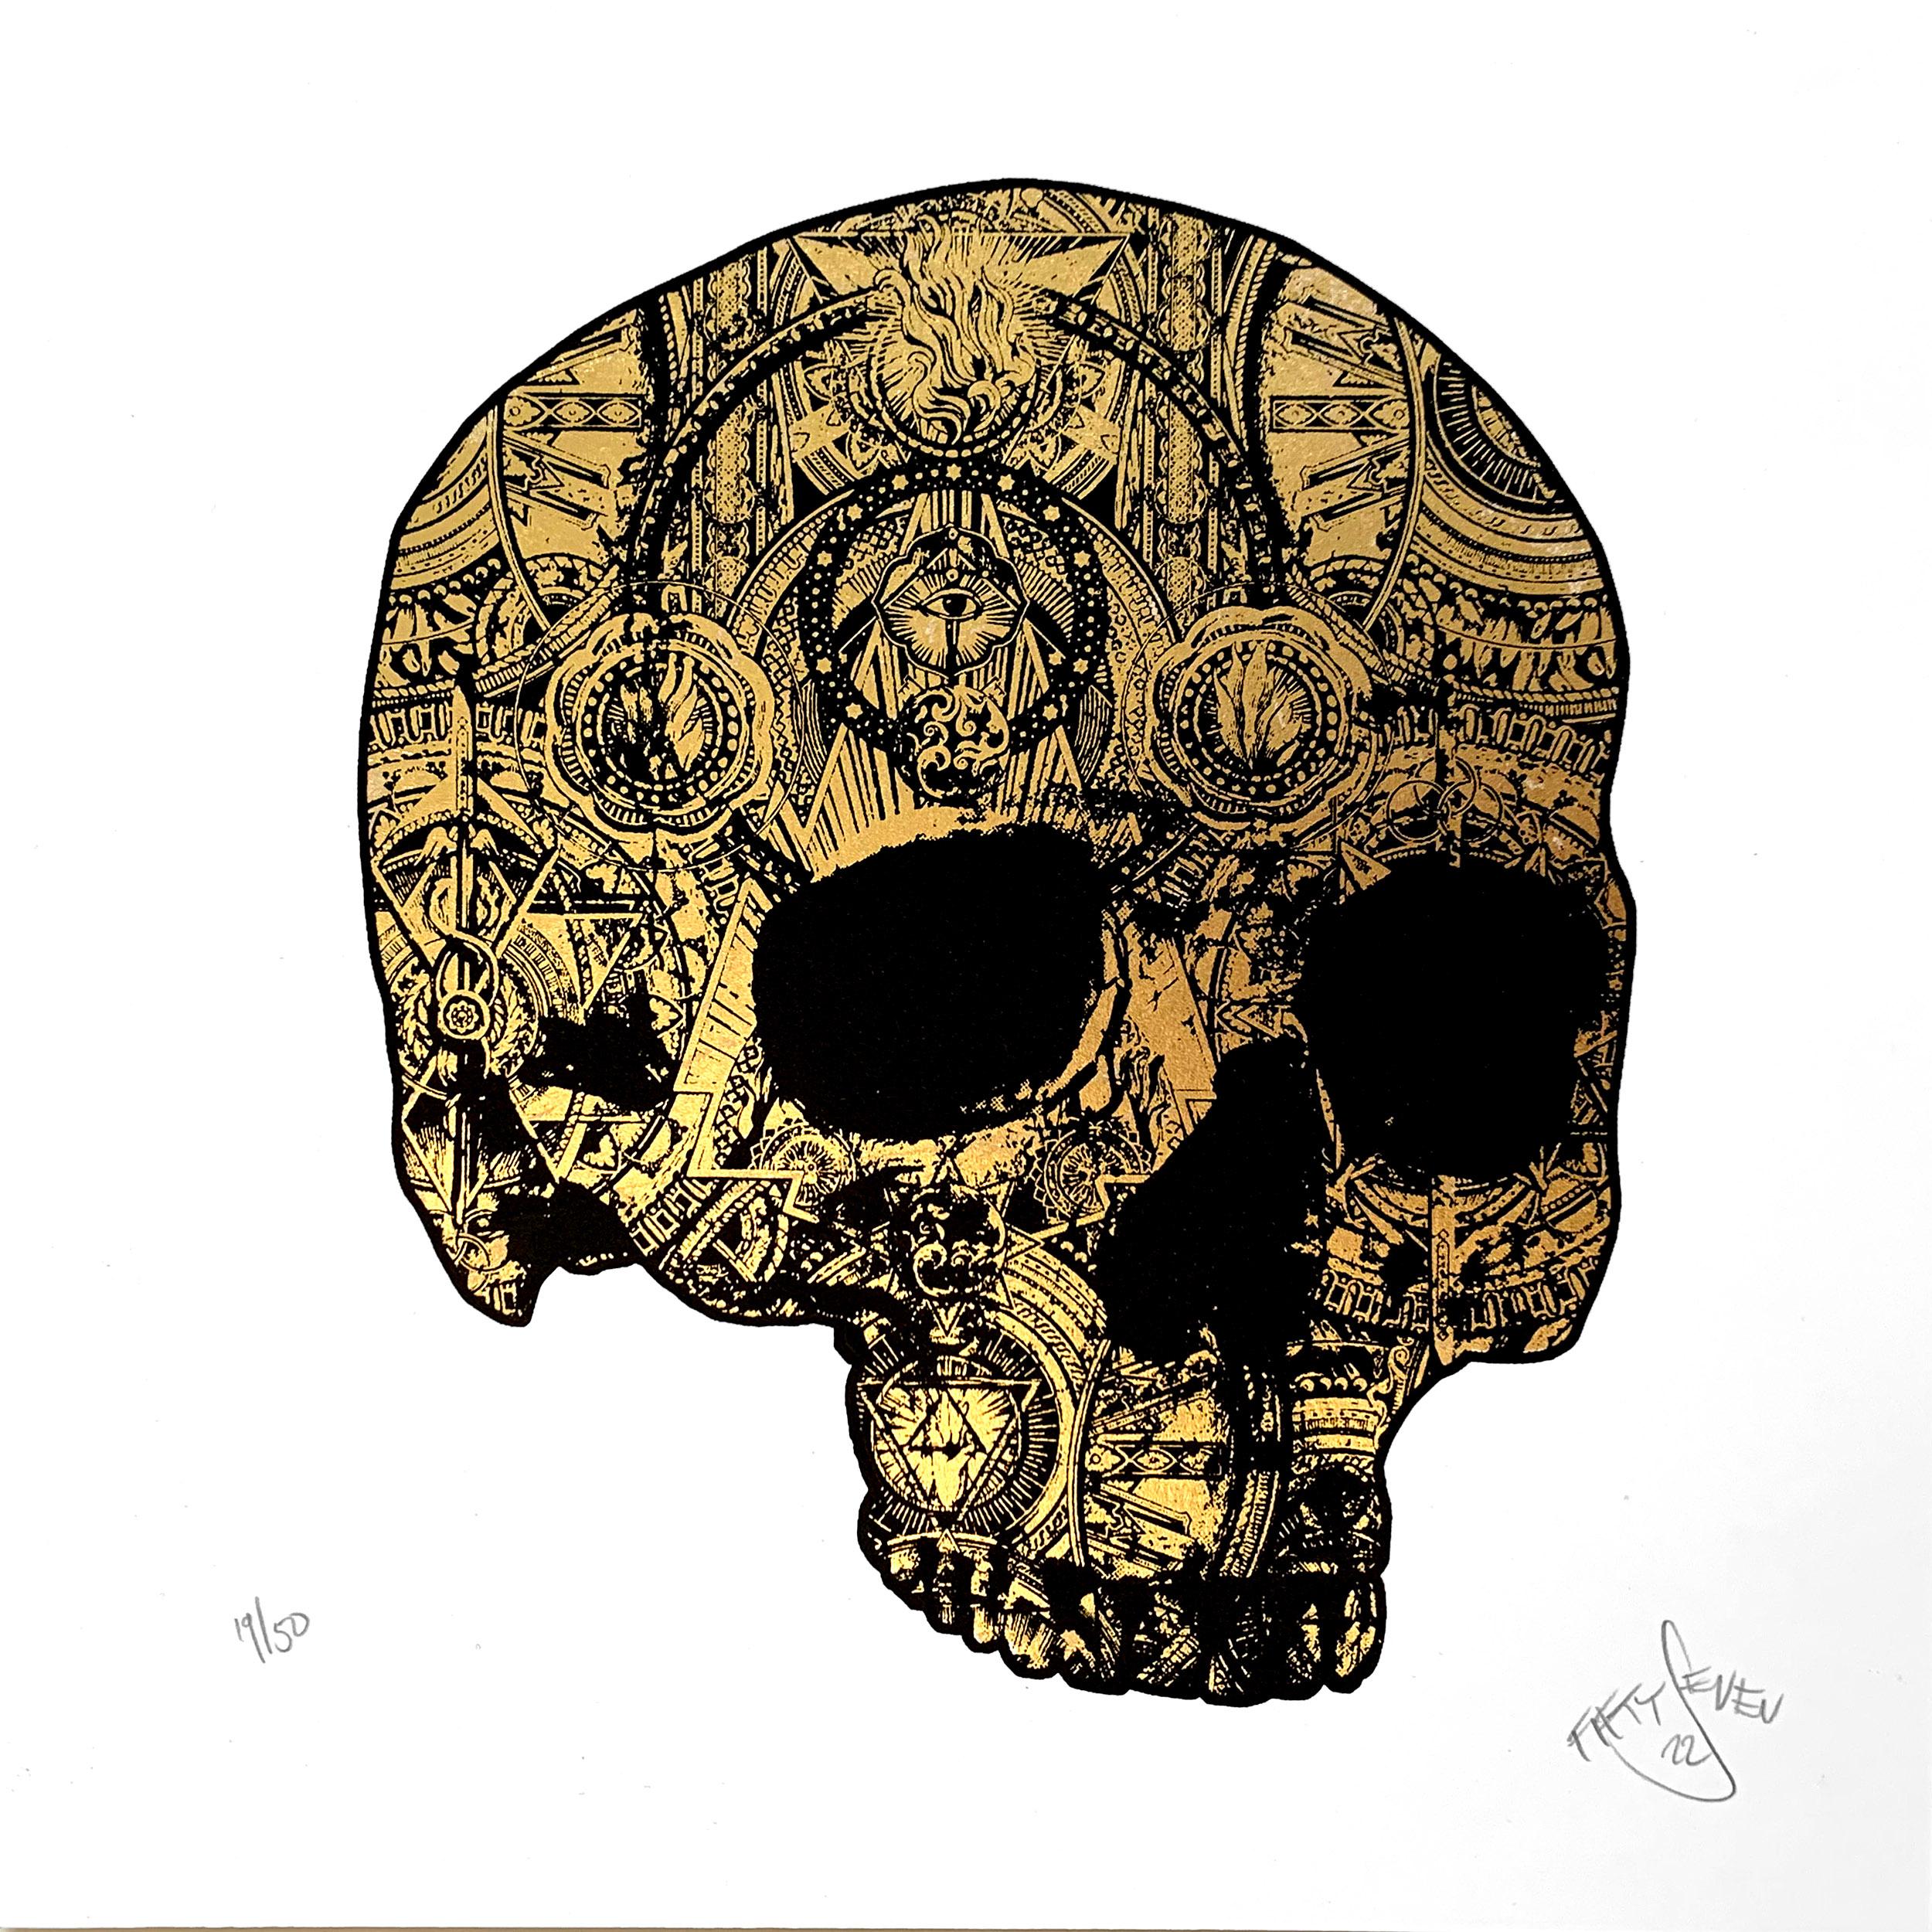 The Golden skull - right